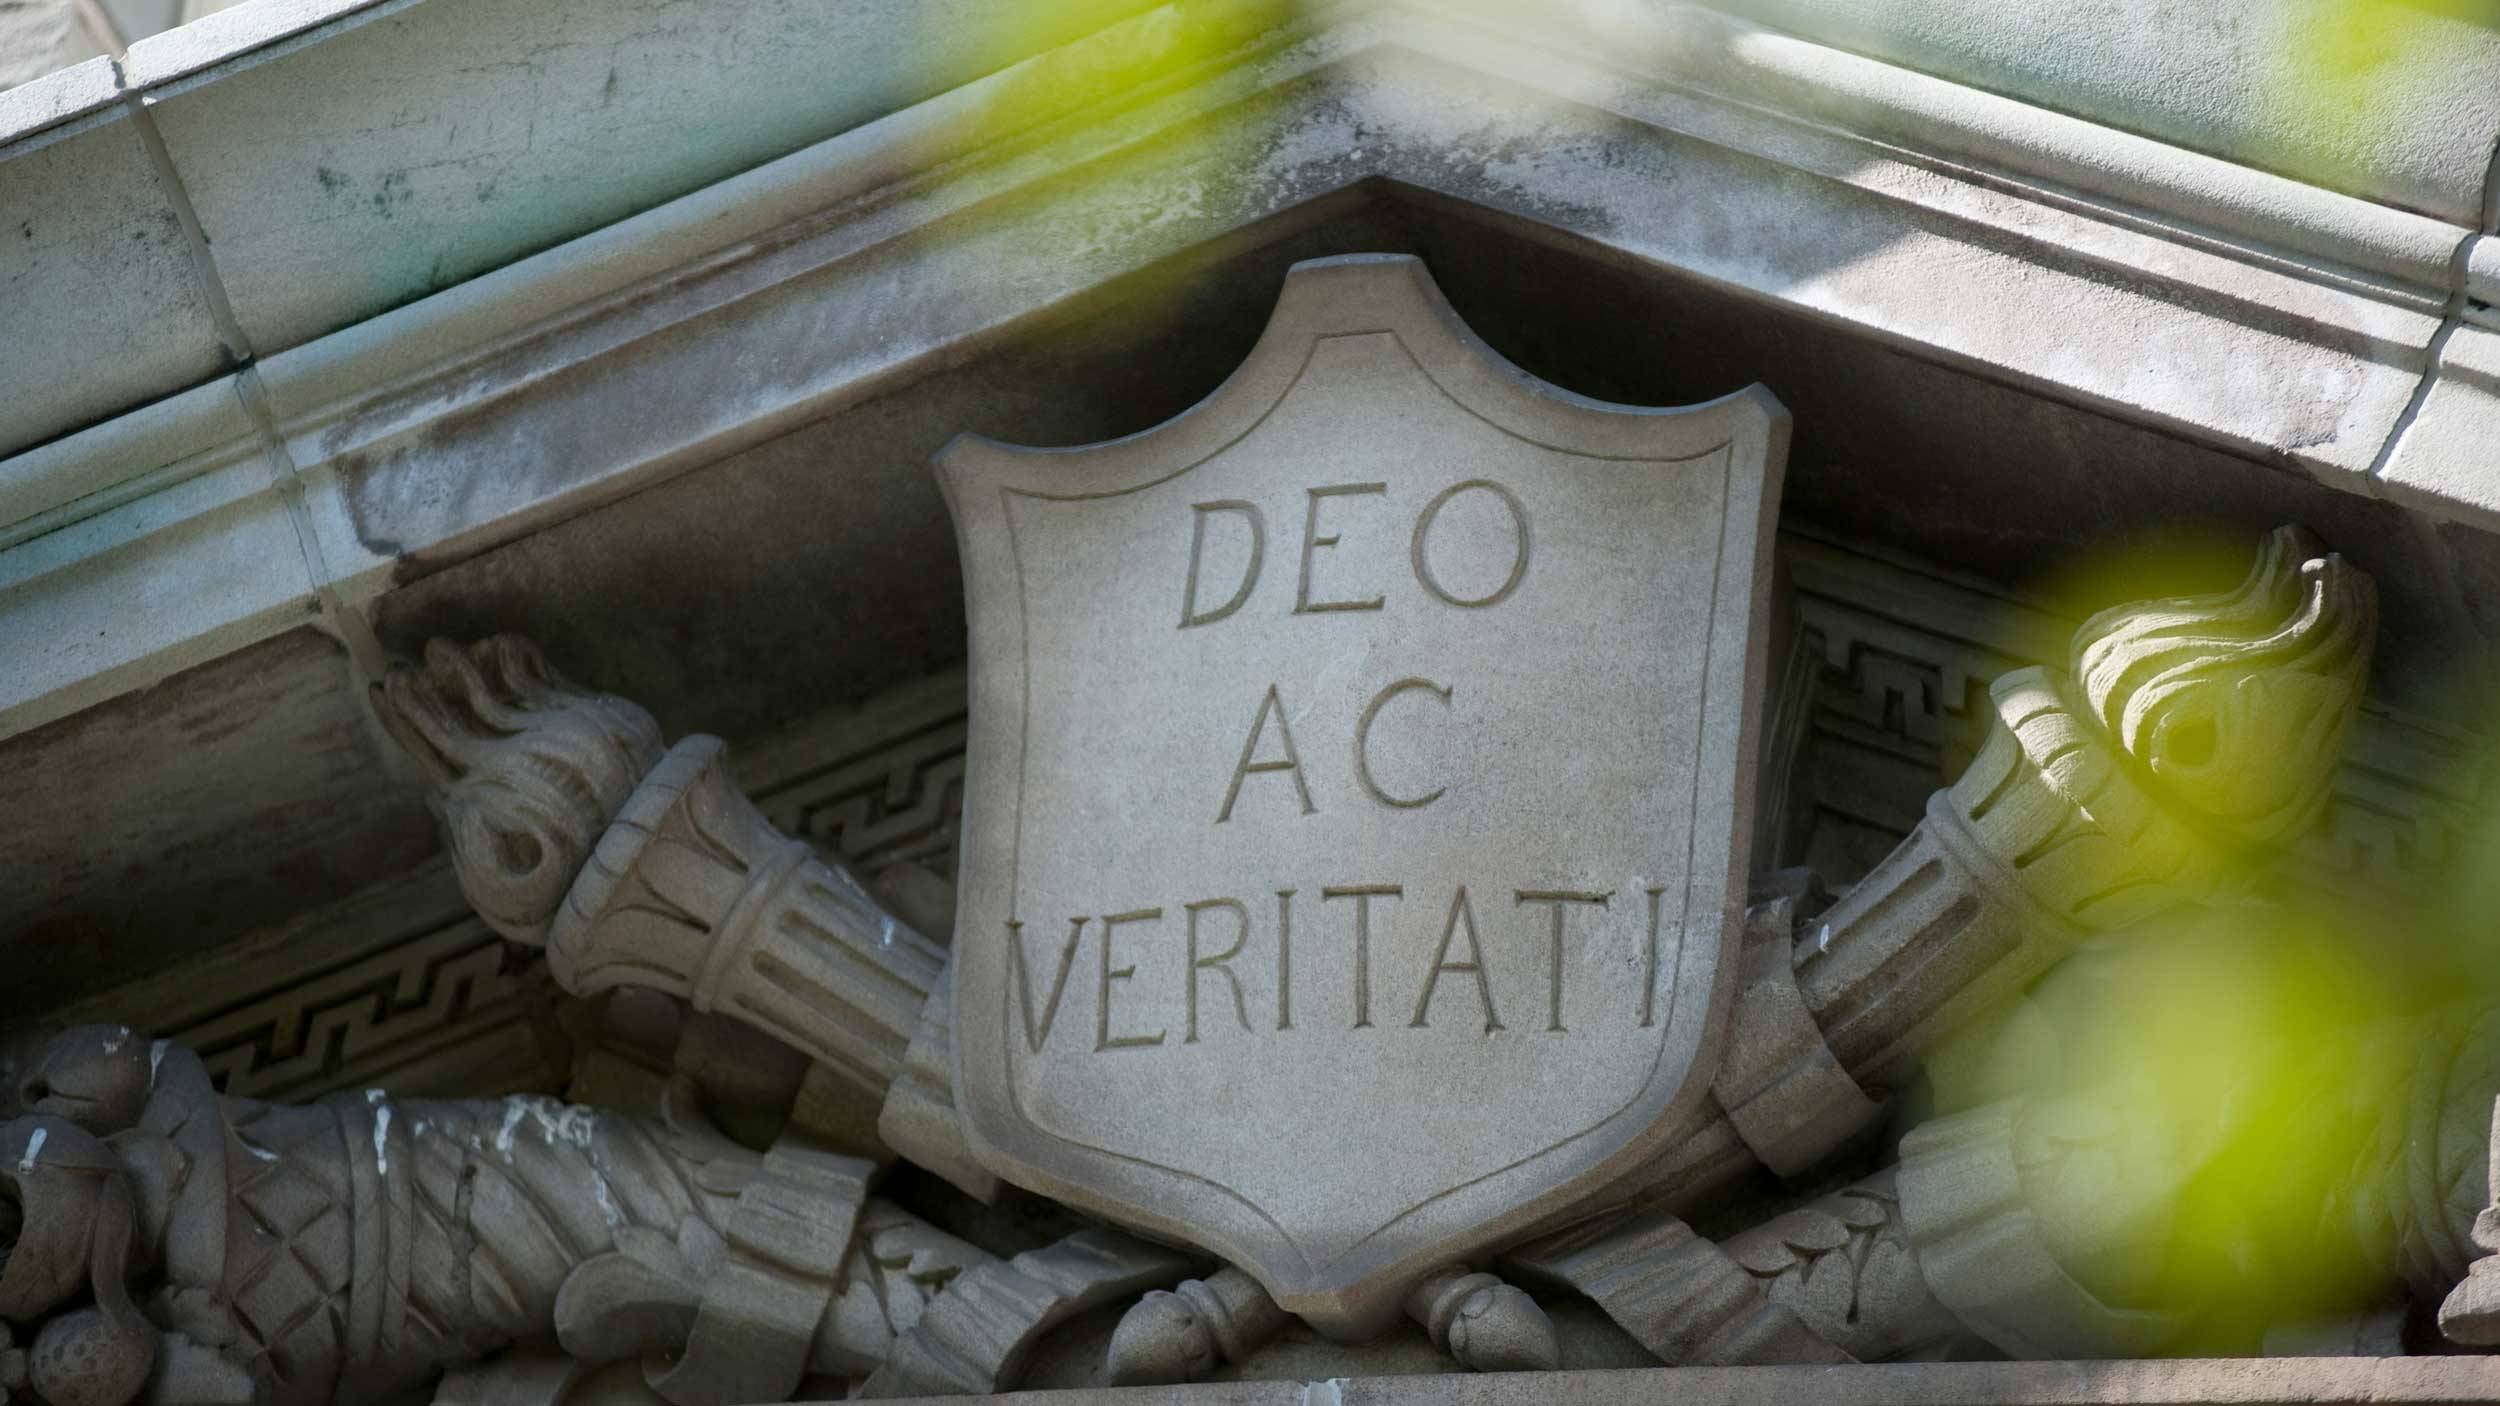 Deo Ac Veritati on stone shield